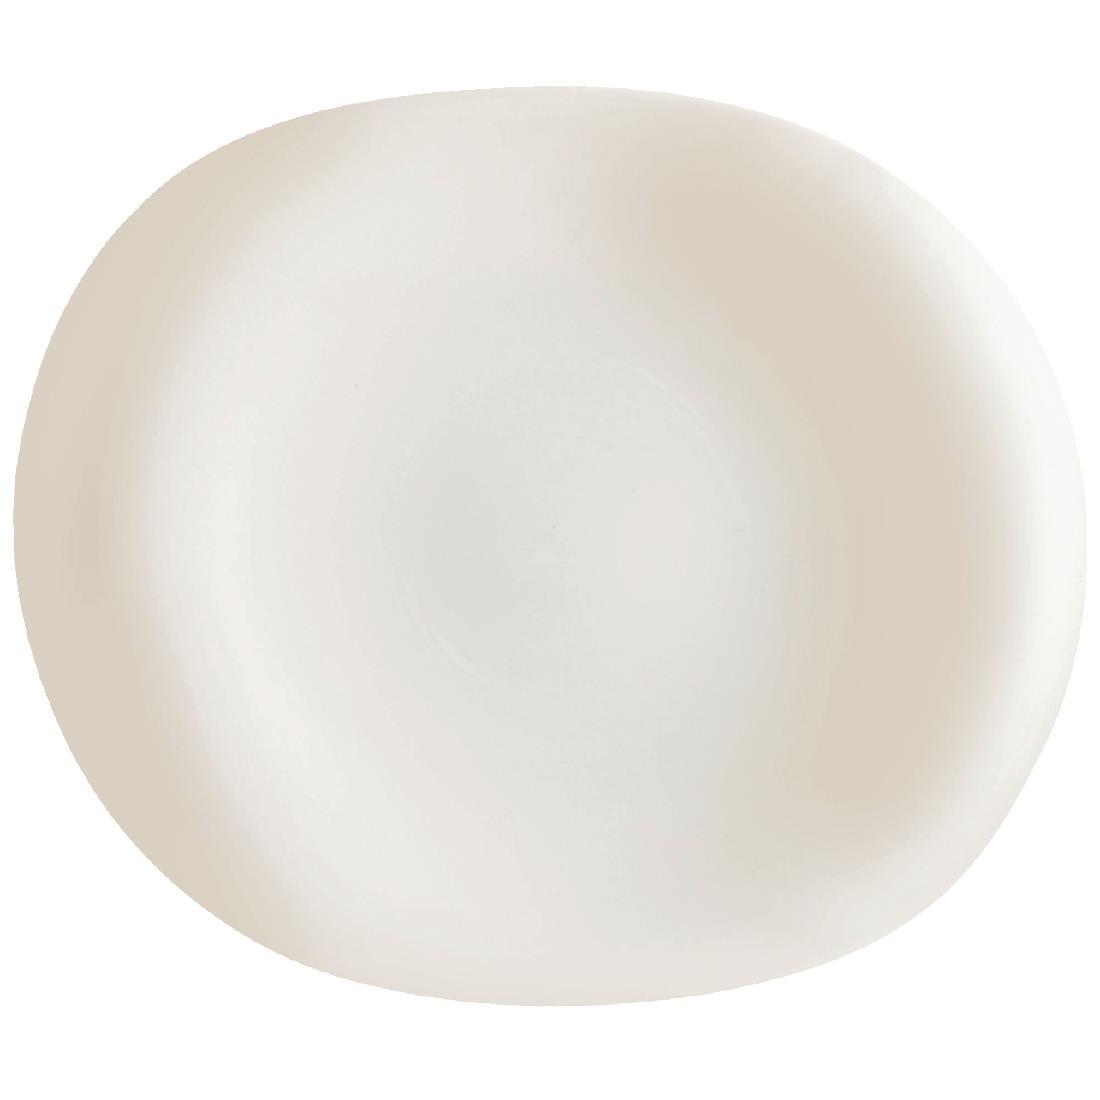 Arcoroc Zenix Tendency Organic Shape Oval Plates 310mm (Pack of 12) - GC741  - 1